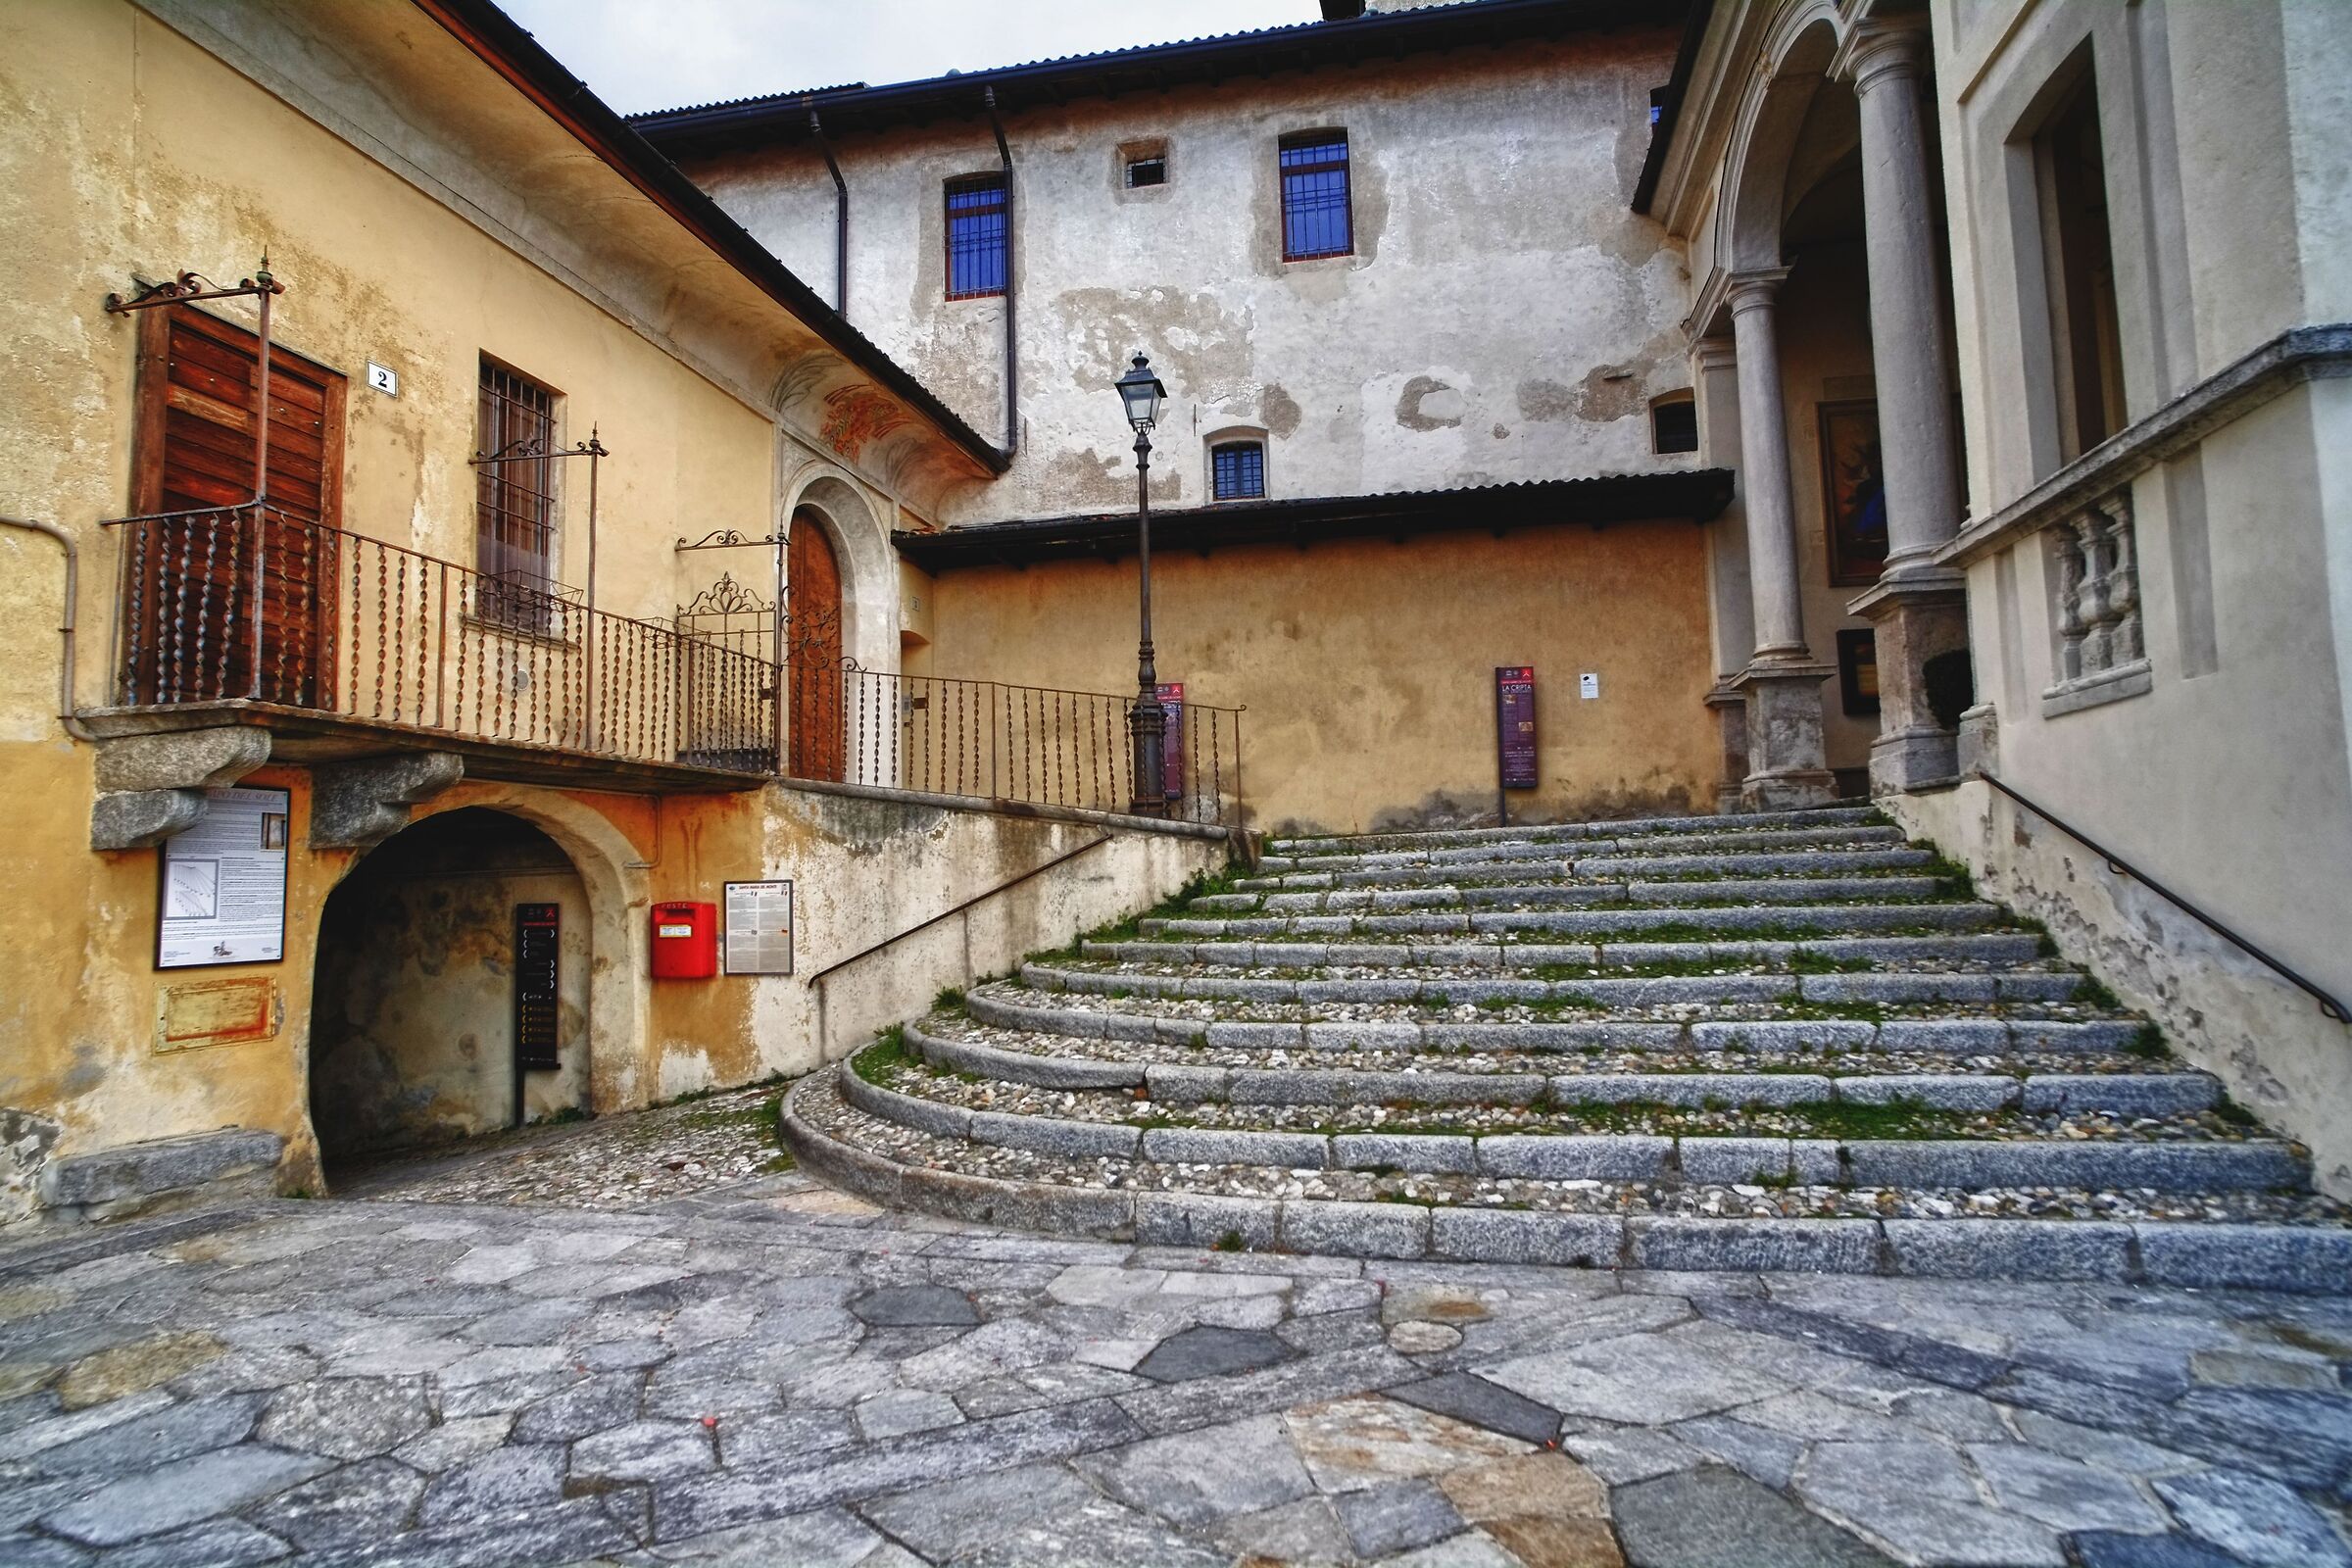 Village of Santa Maria al monte. Sacromonte Varese - Wikipedia ...